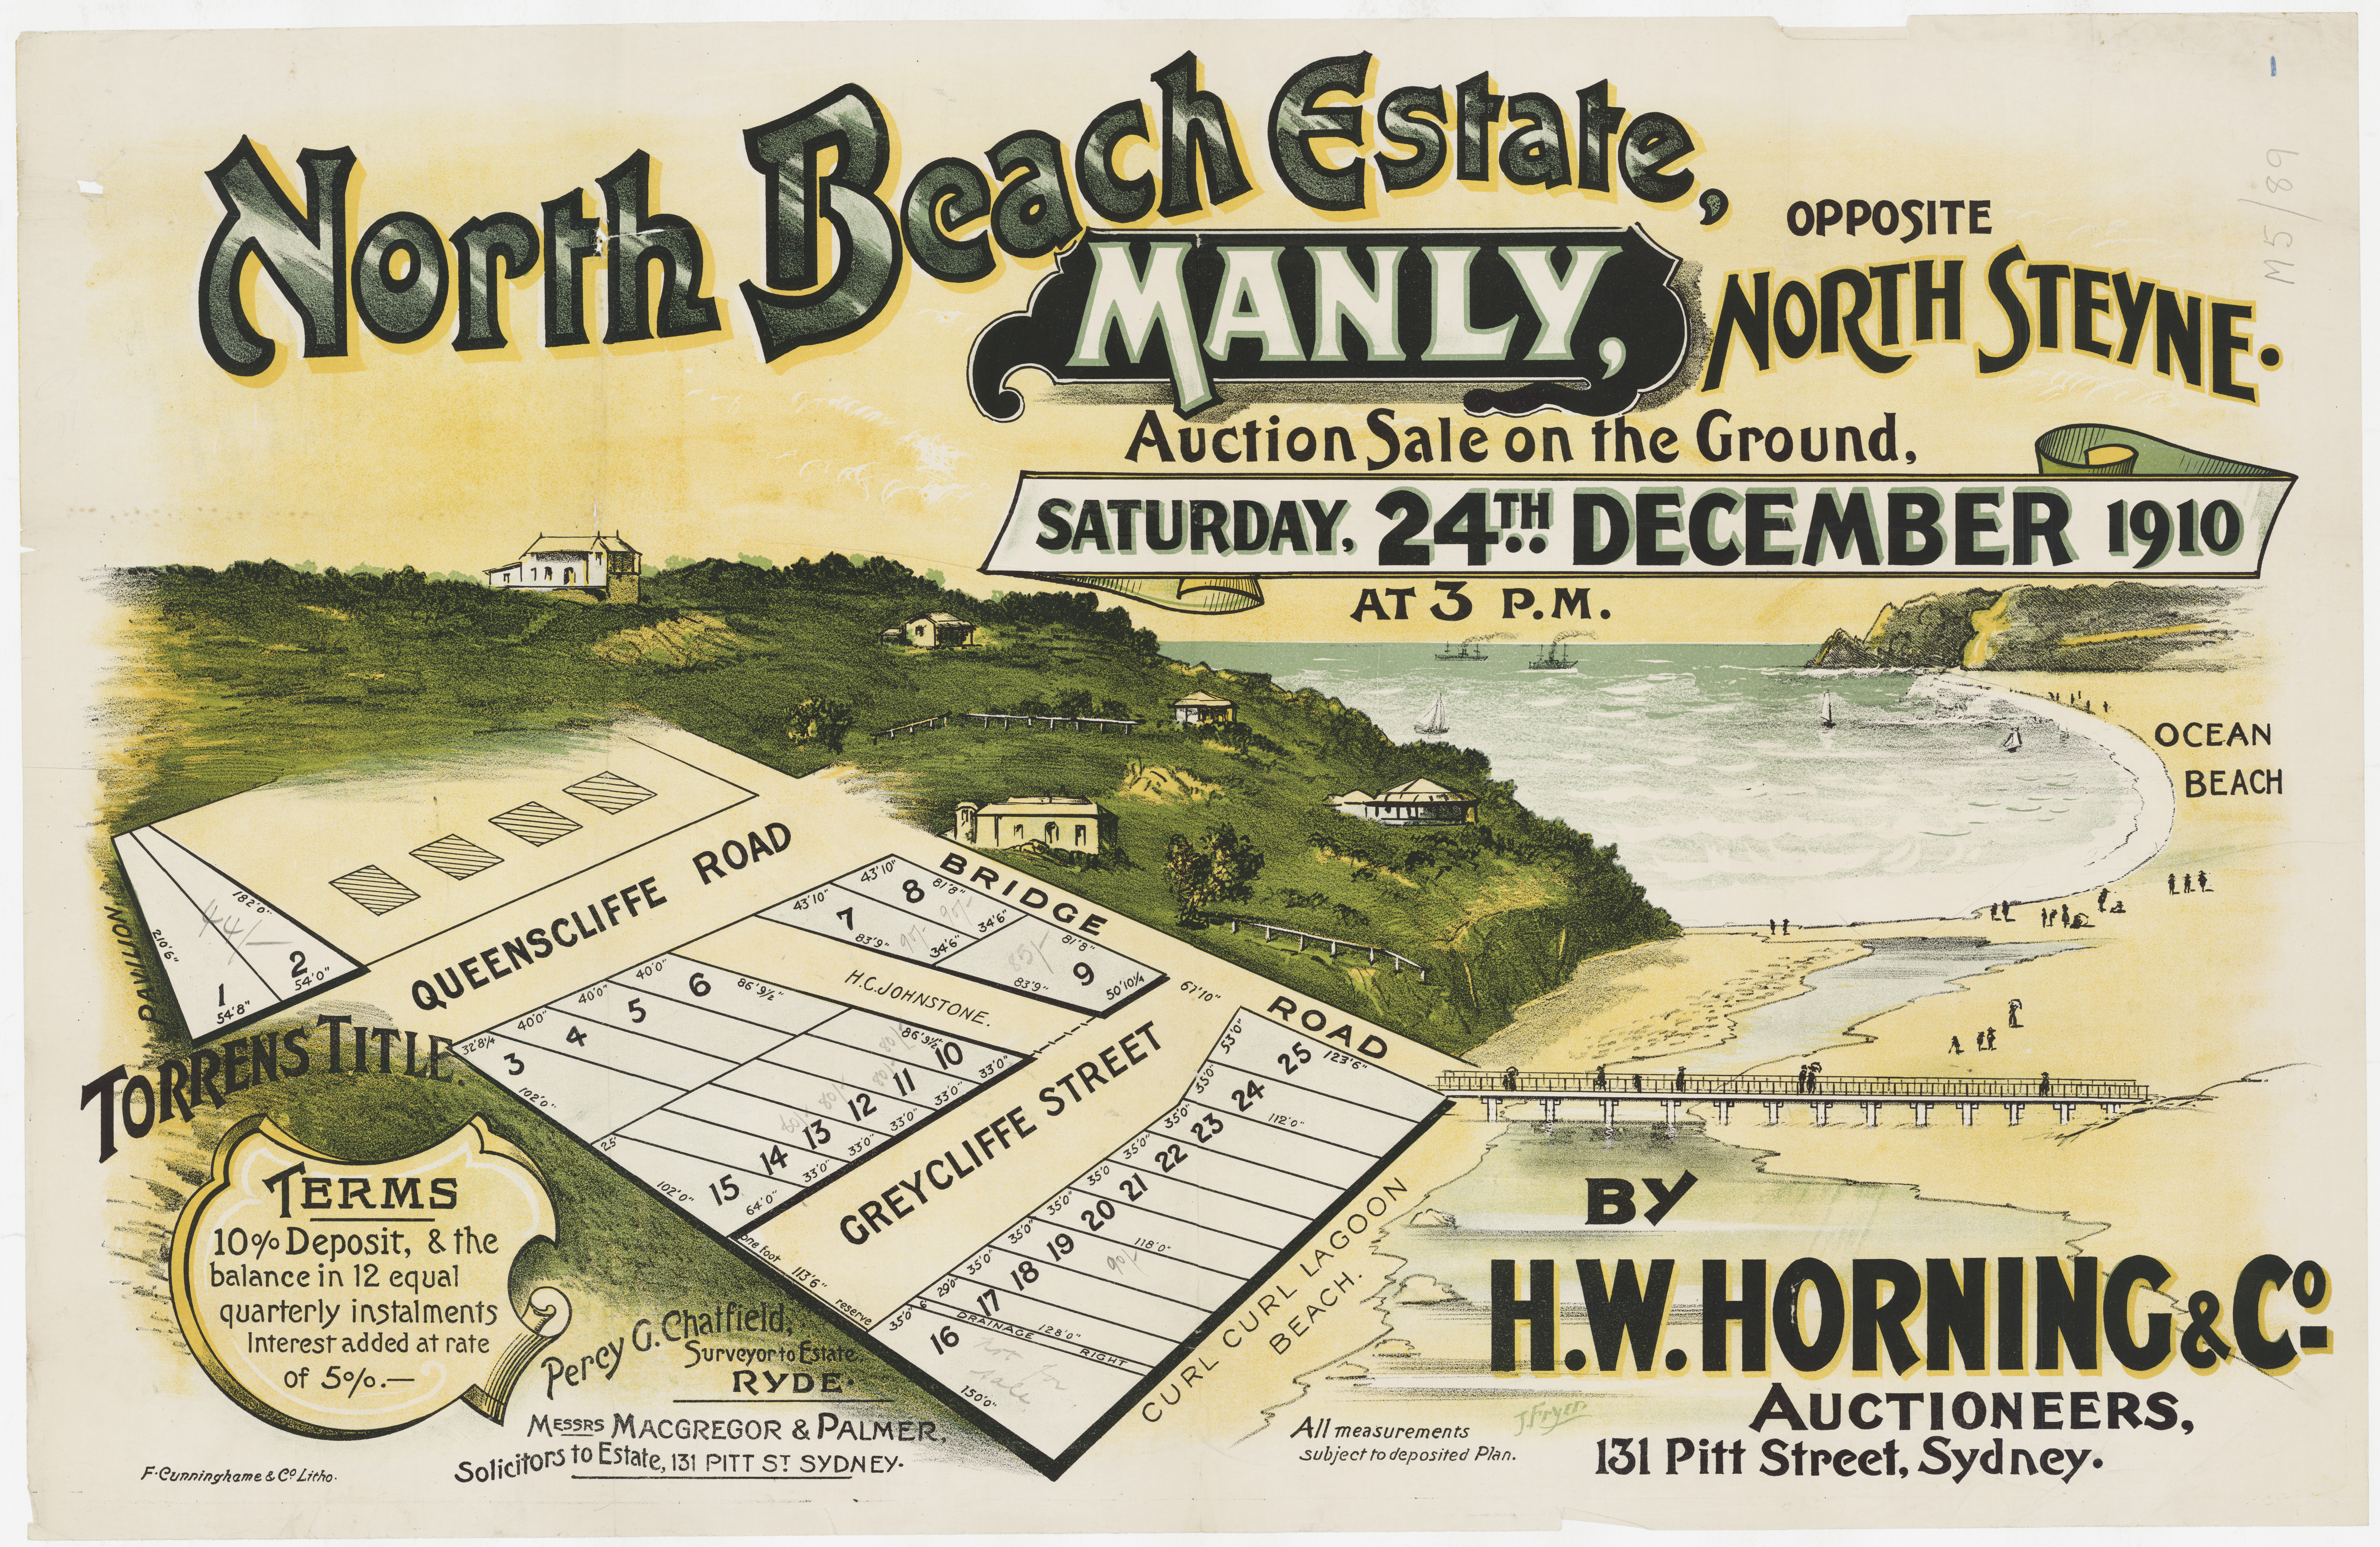 Subdivision Plan: 091 - SP/M5/89 - North Beach Estate Manly opposite North Steyne - Greycliffe St, Queenscliffe Rd, Bridge Rd, 1910